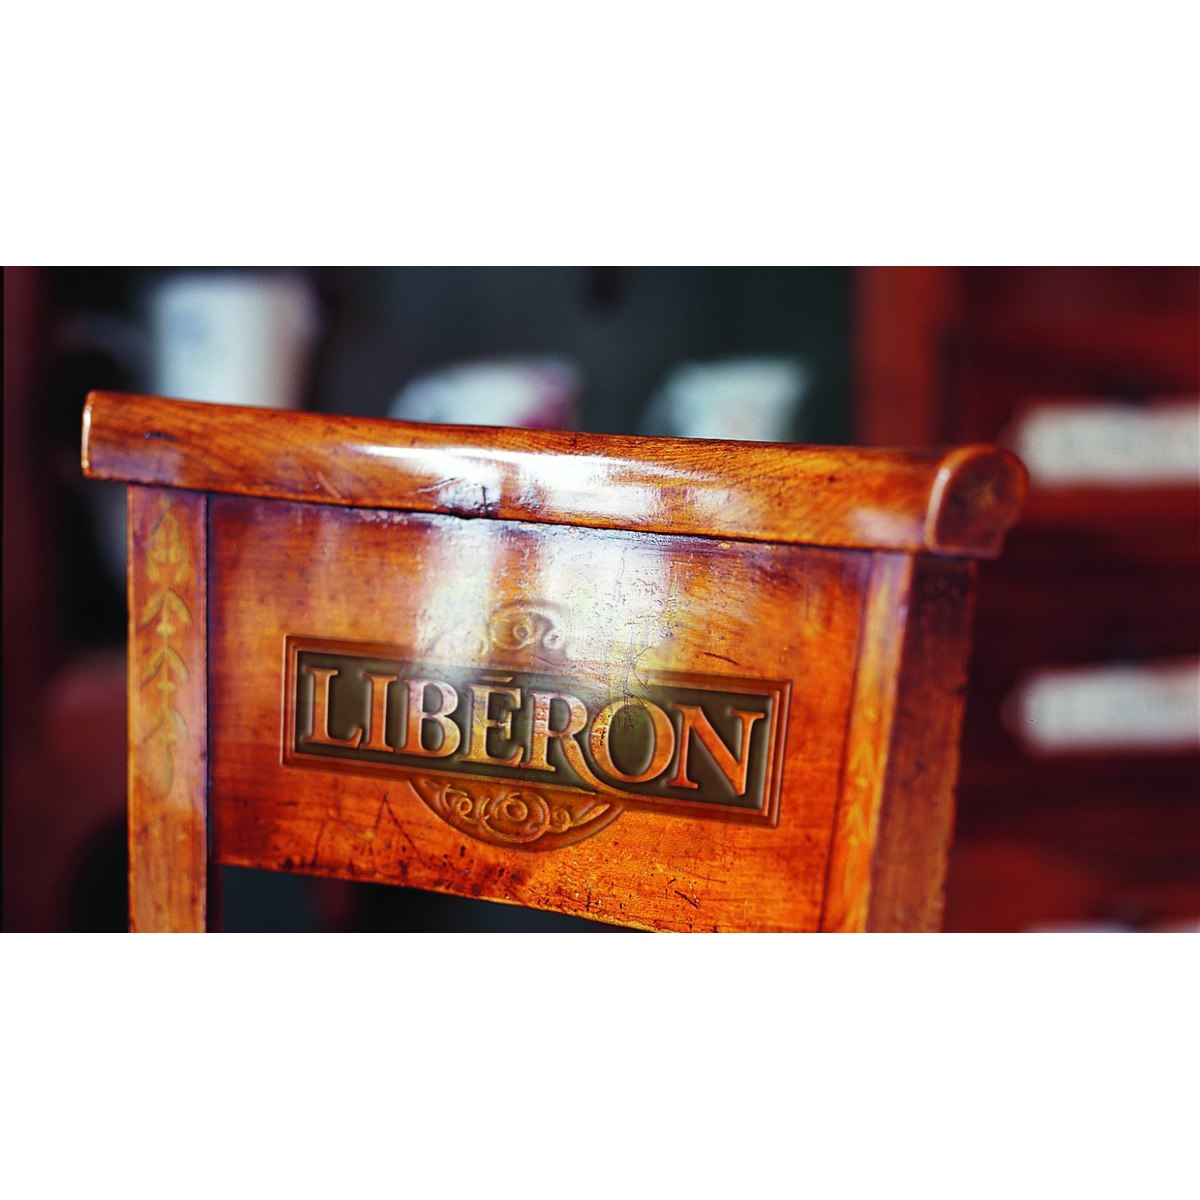 Where to buy Liberon Floor Oil